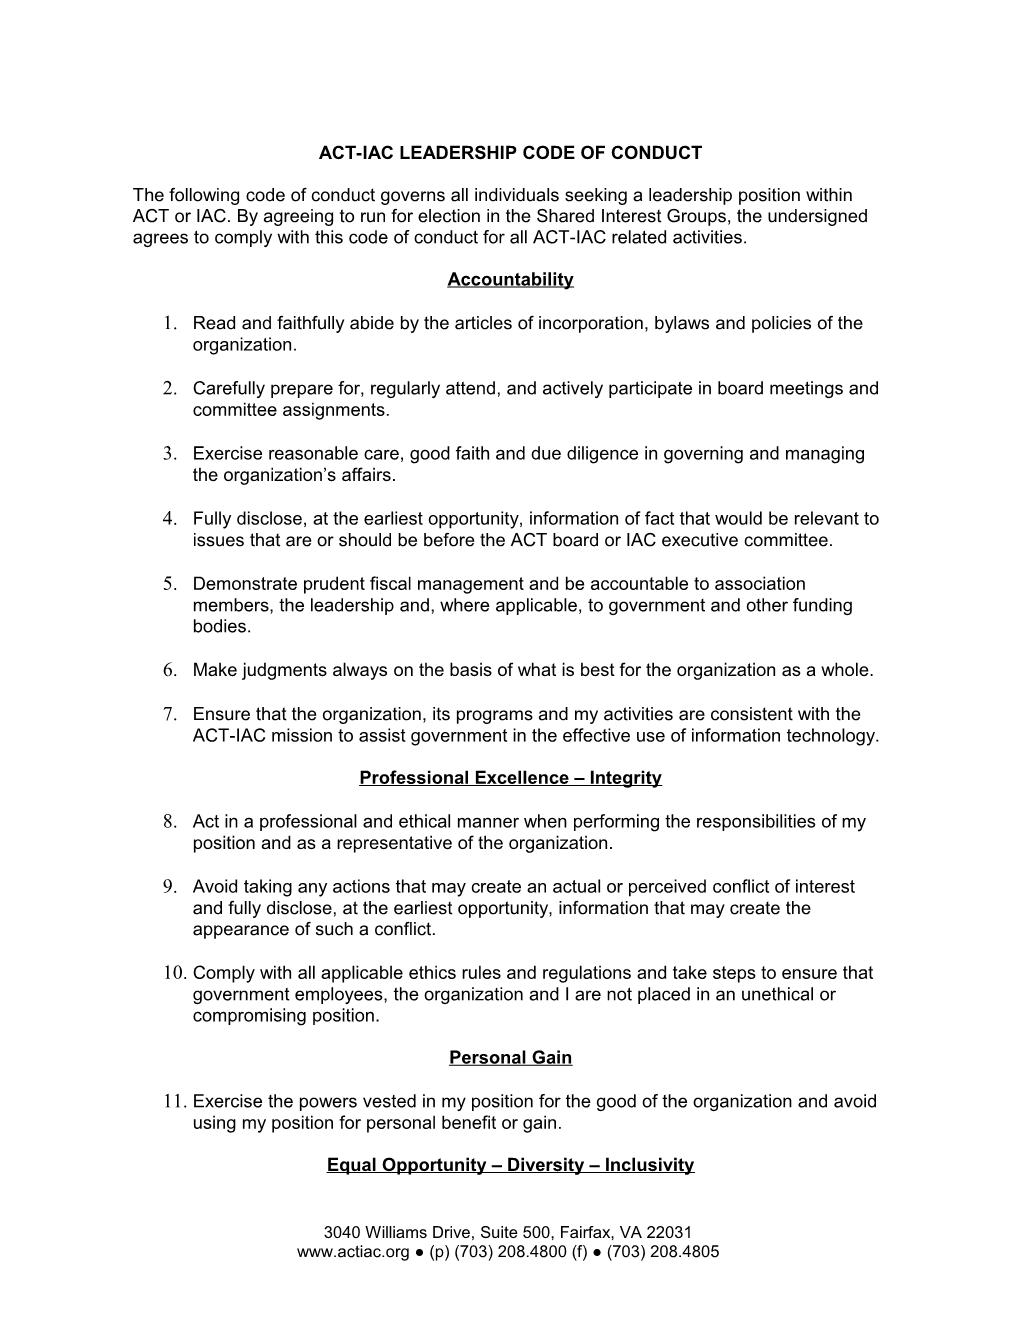 Act-Iac Leadership Code of Conduct